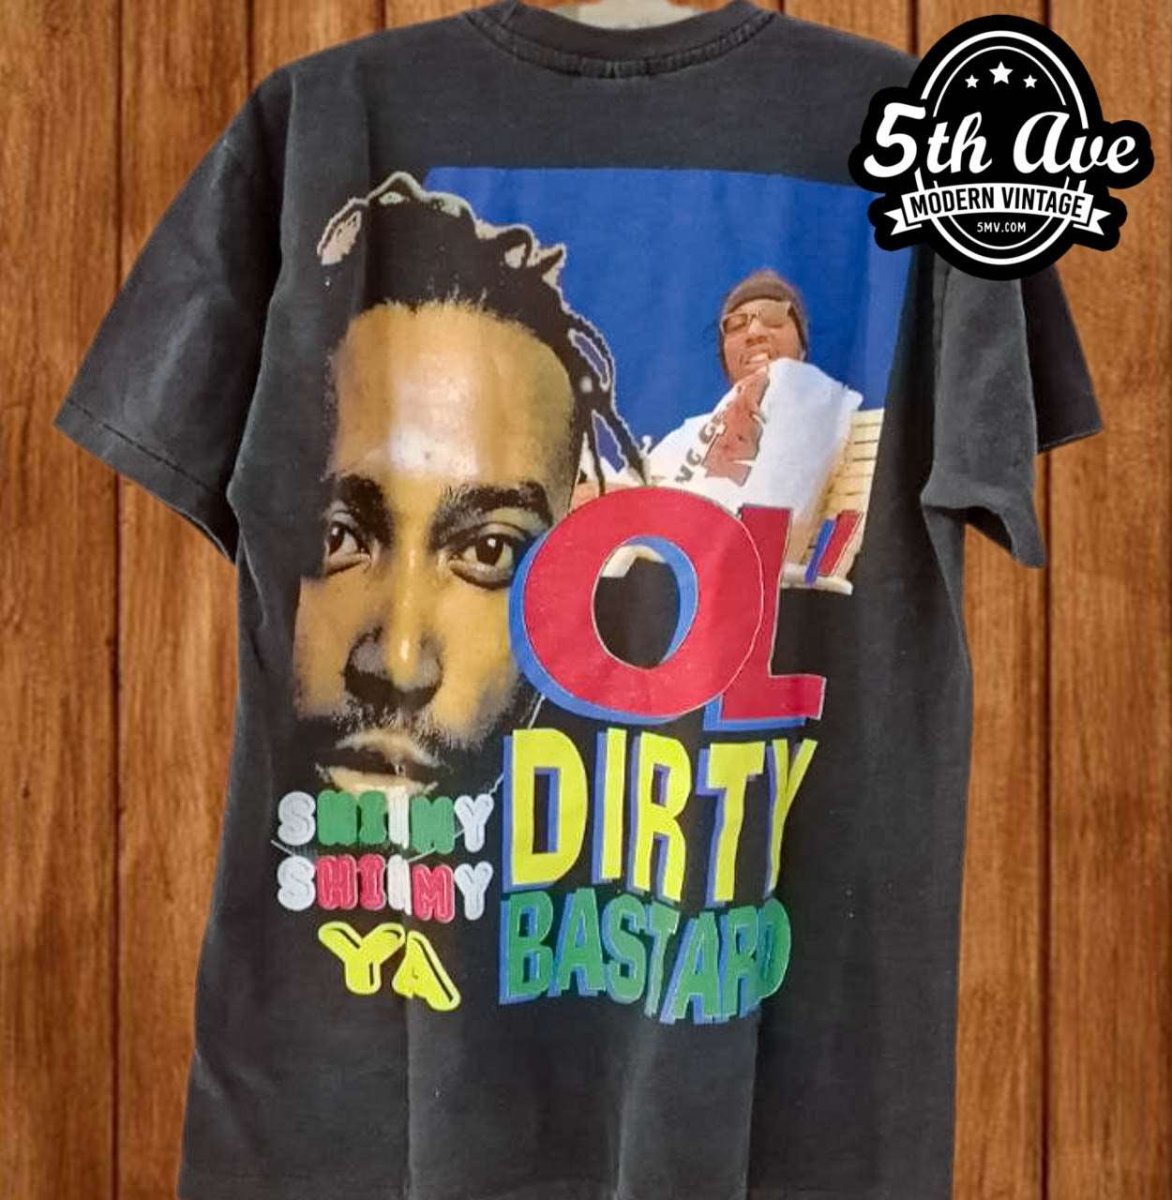 Raw and Uncensored: Ol' Dirty Bastard Tribute t shirt - Vintage Band Shirts